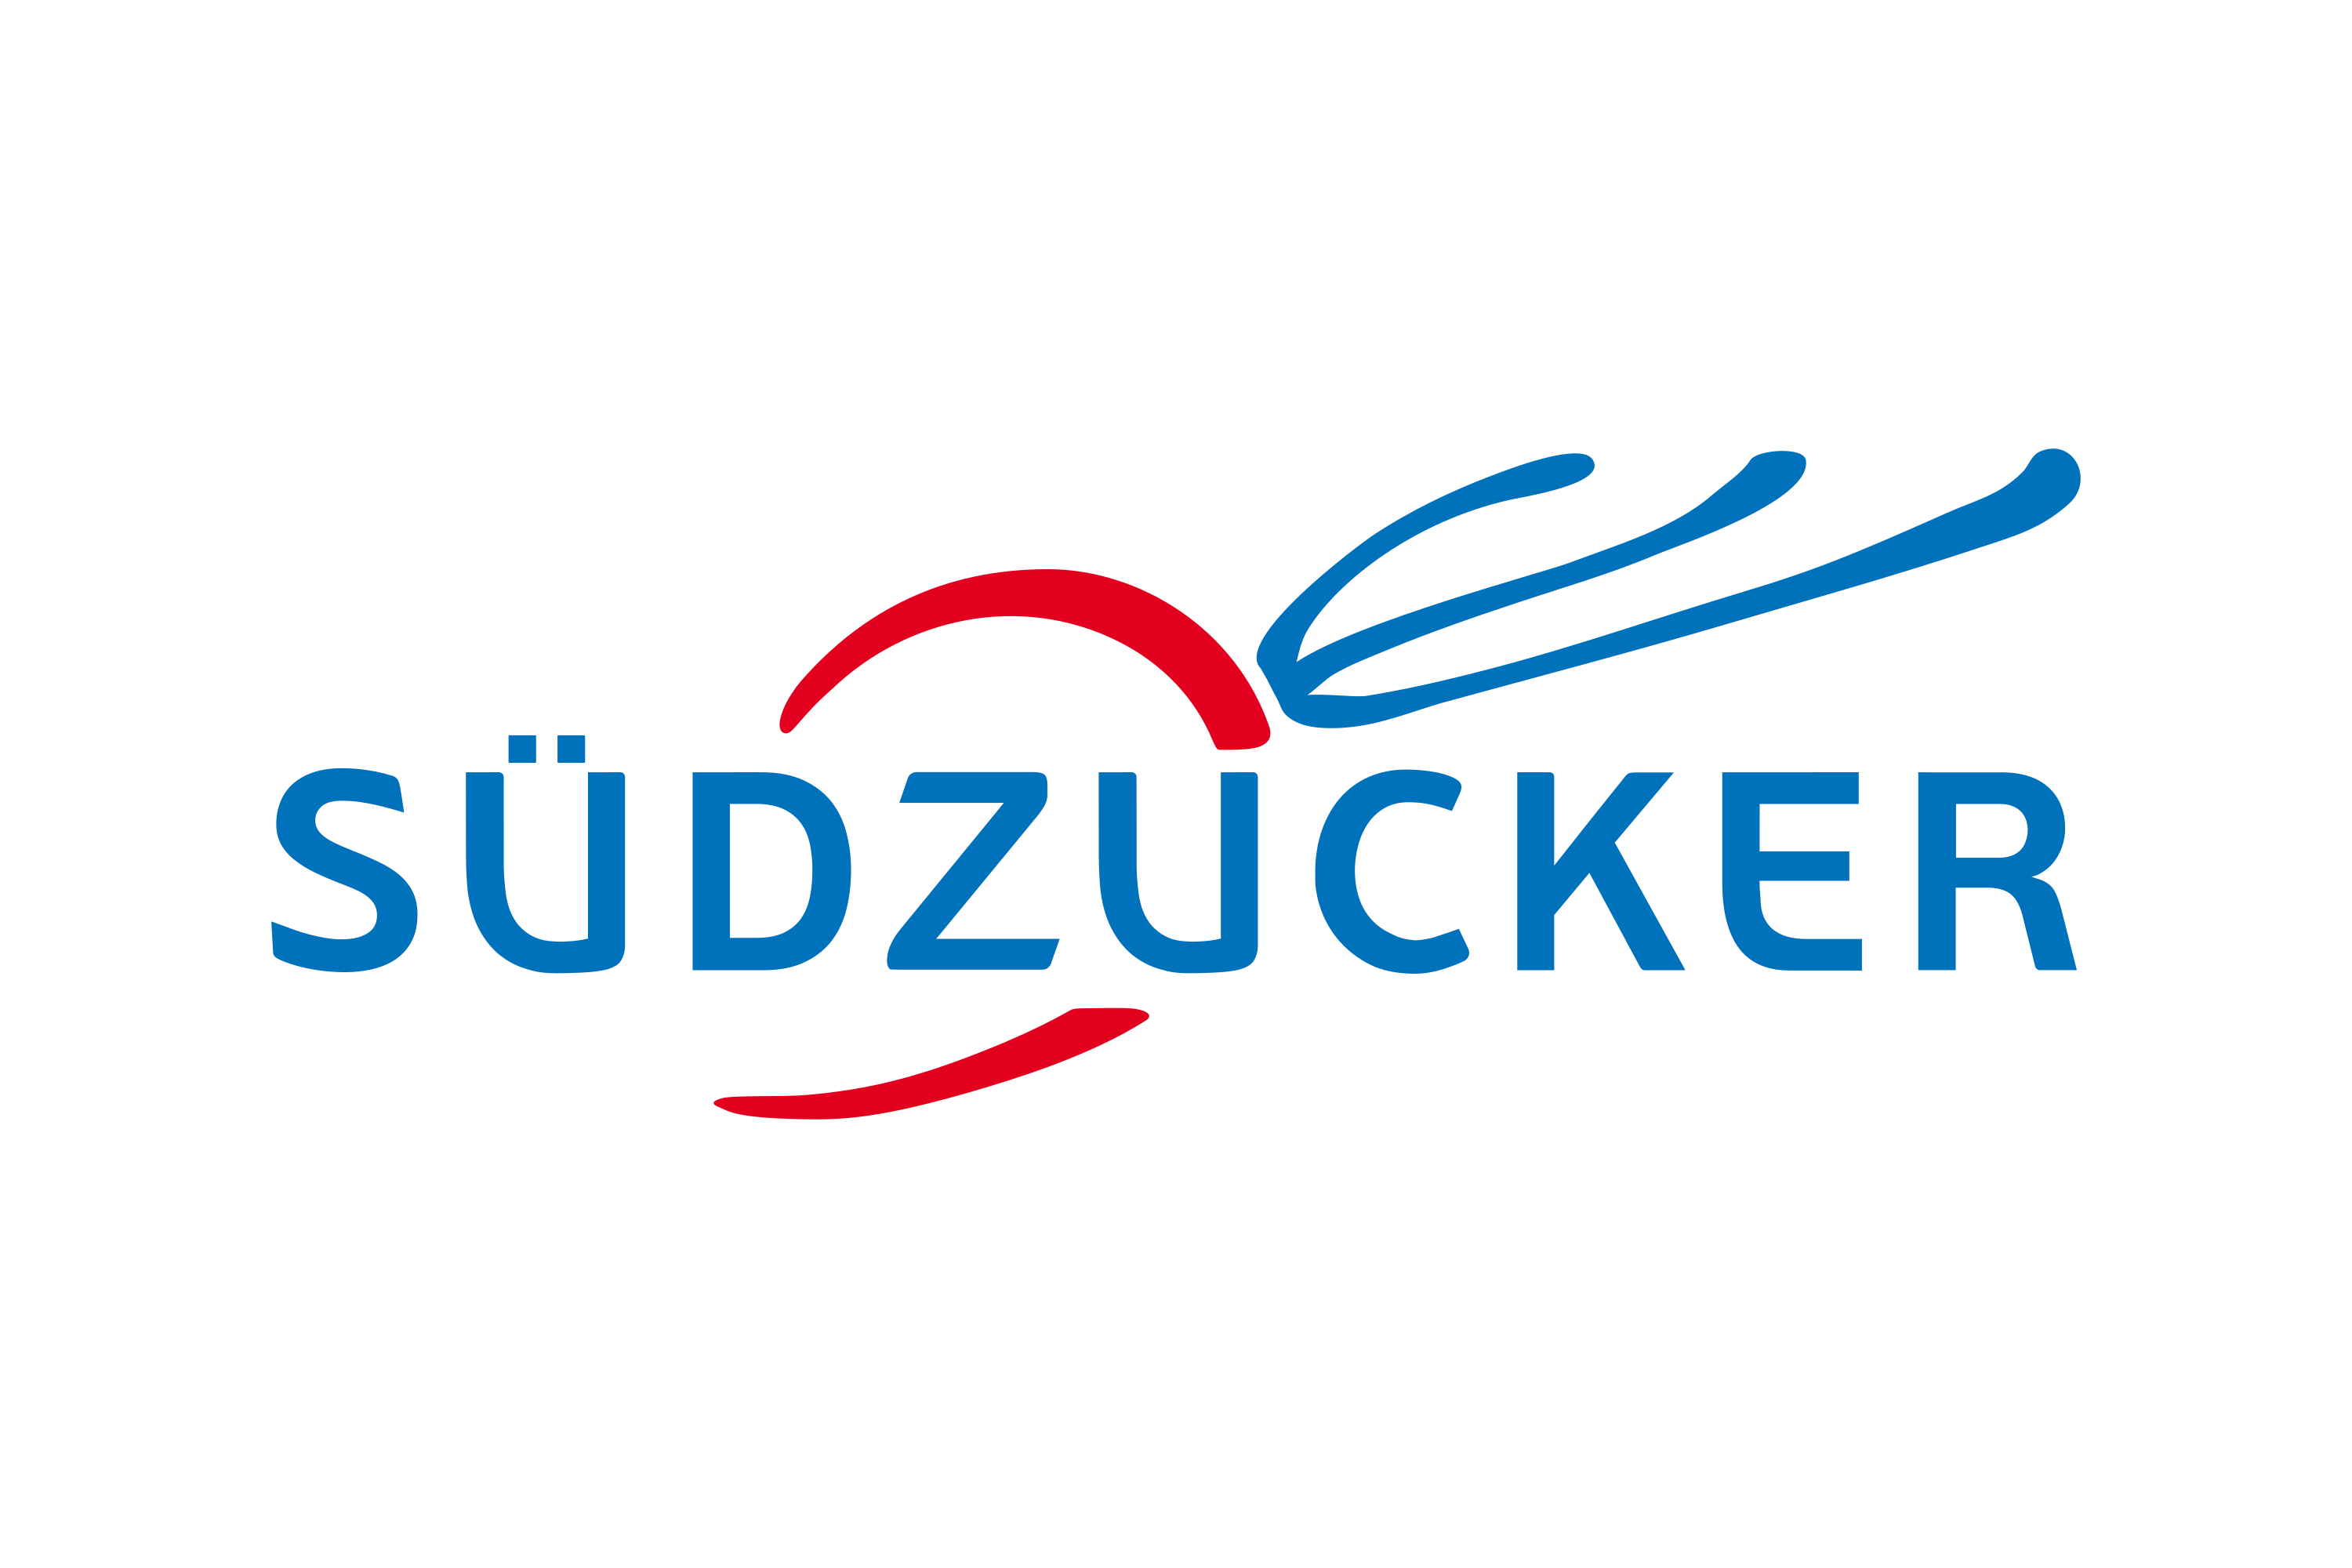 Südzucker Logo